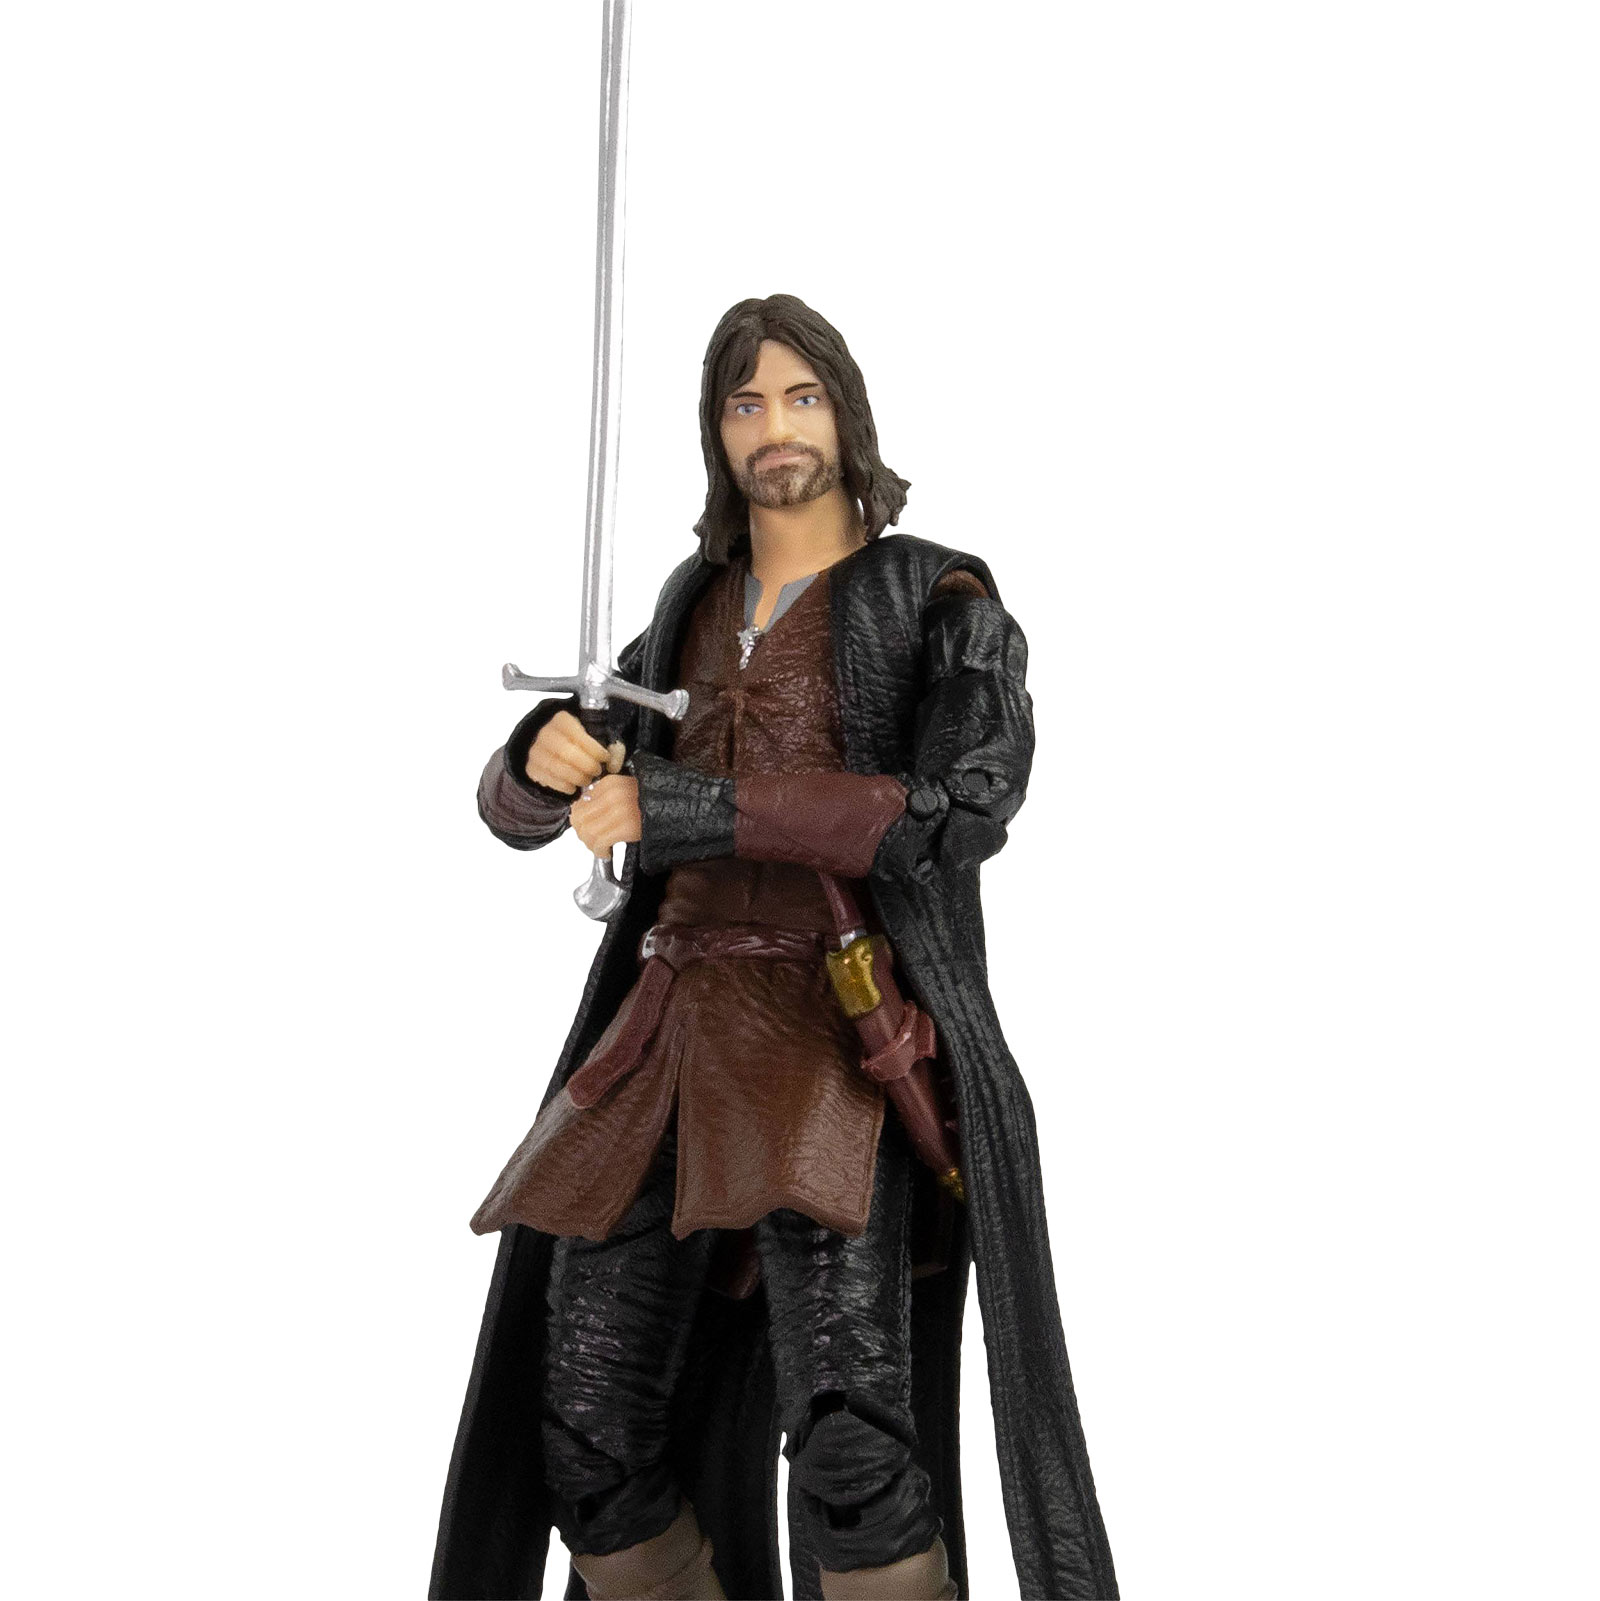 Herr der Ringe - Aragorn BST AXN Actionfigur